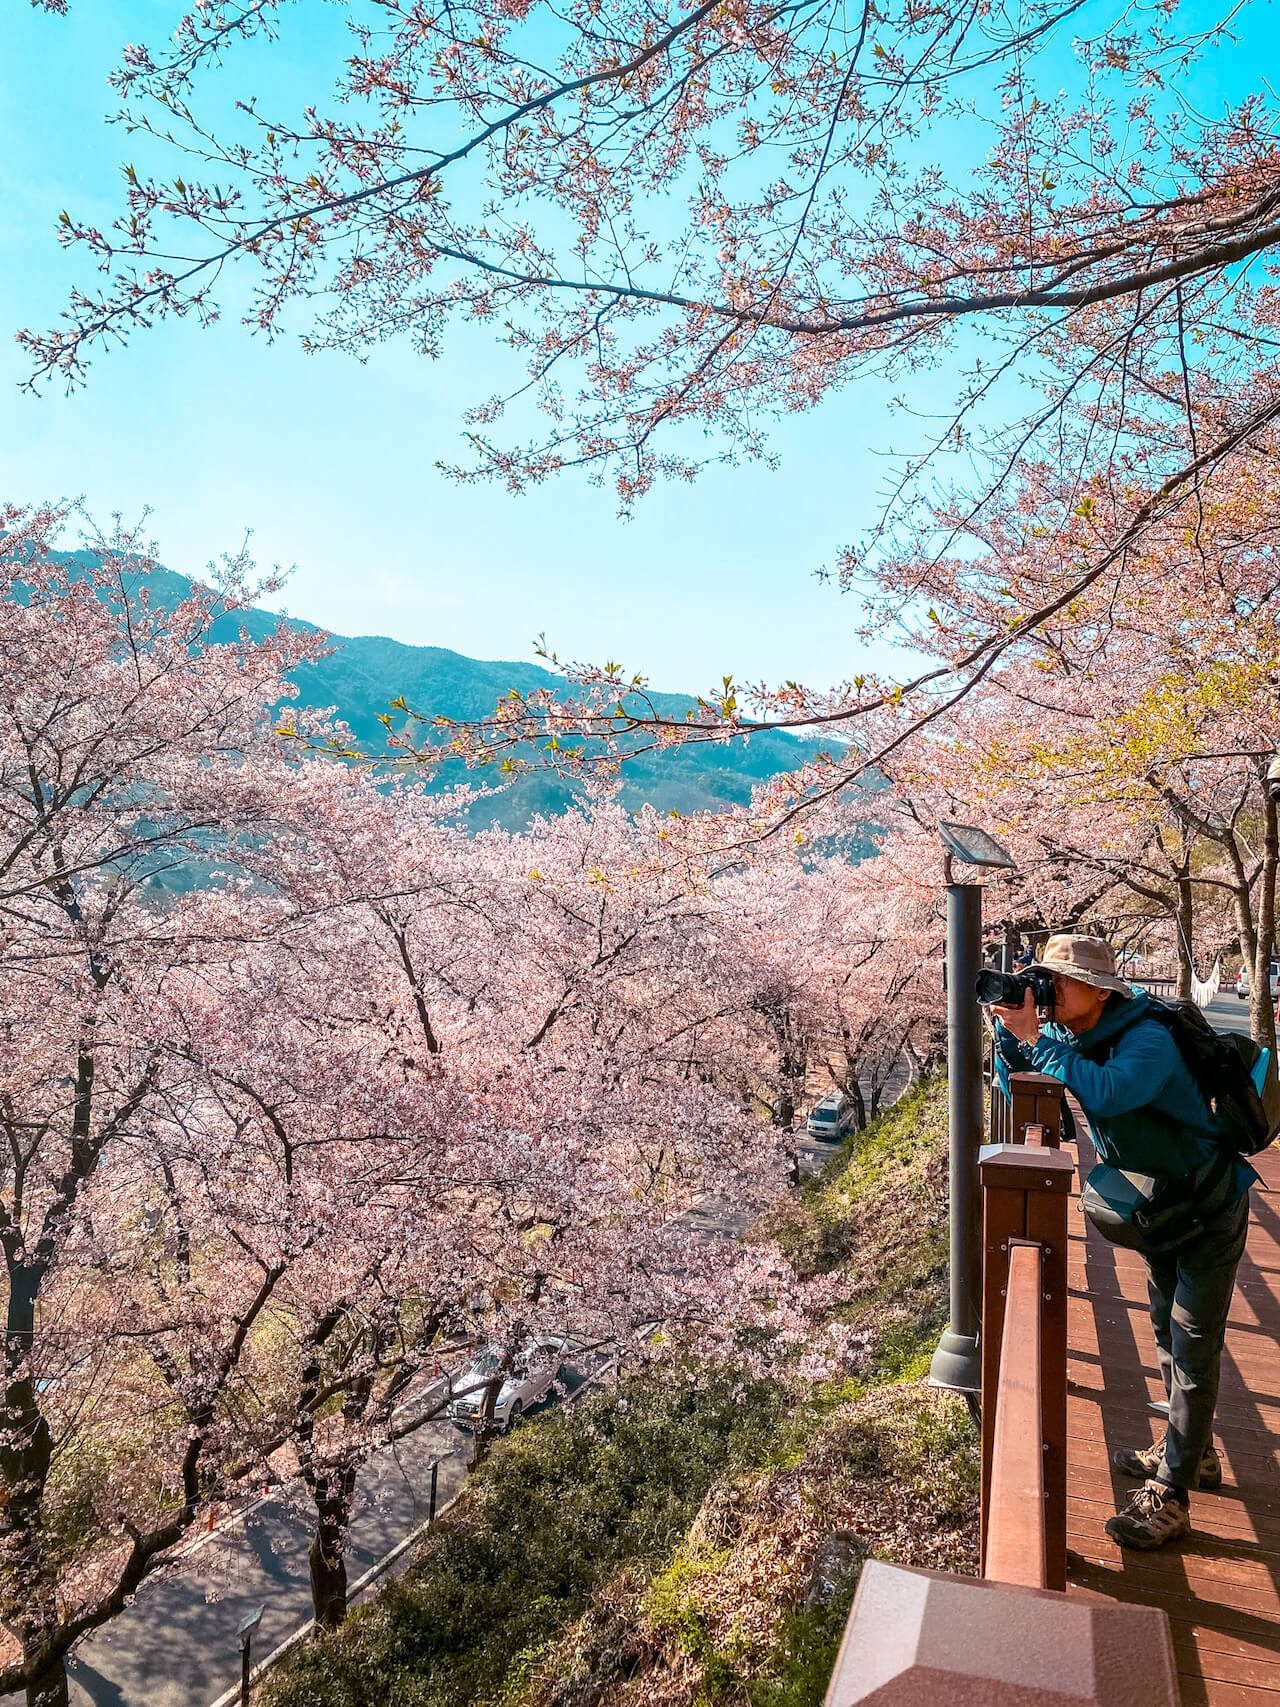 cherry blossoms in korea | Simni cherry blossom trail in hadong